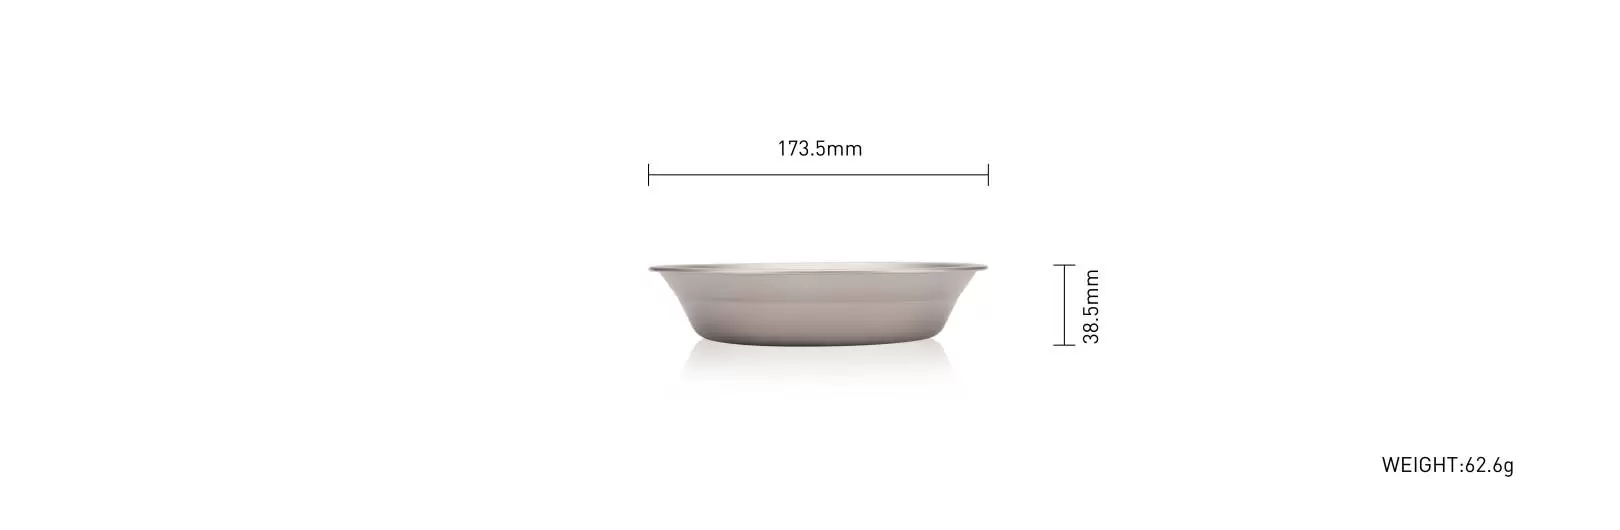 details of Rectangular Single Sanded Surface Titanium Lunch Bowl